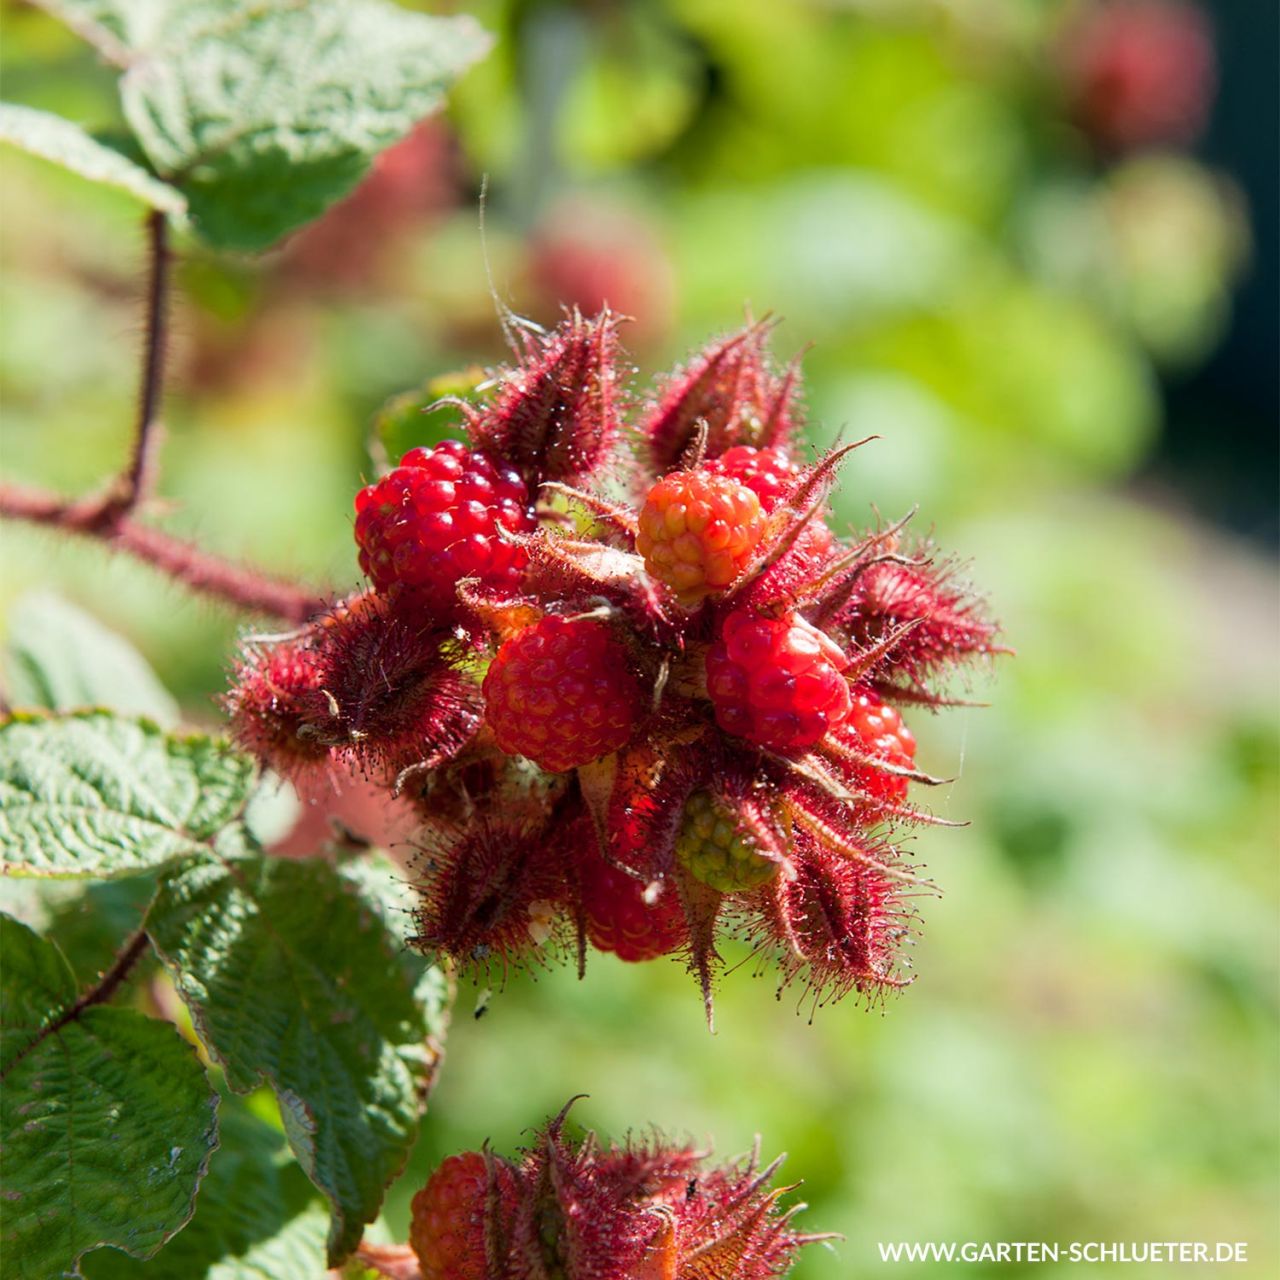  Japanische Weinbeere / Rotborstige Himbeere - Rubus phoenicolasius